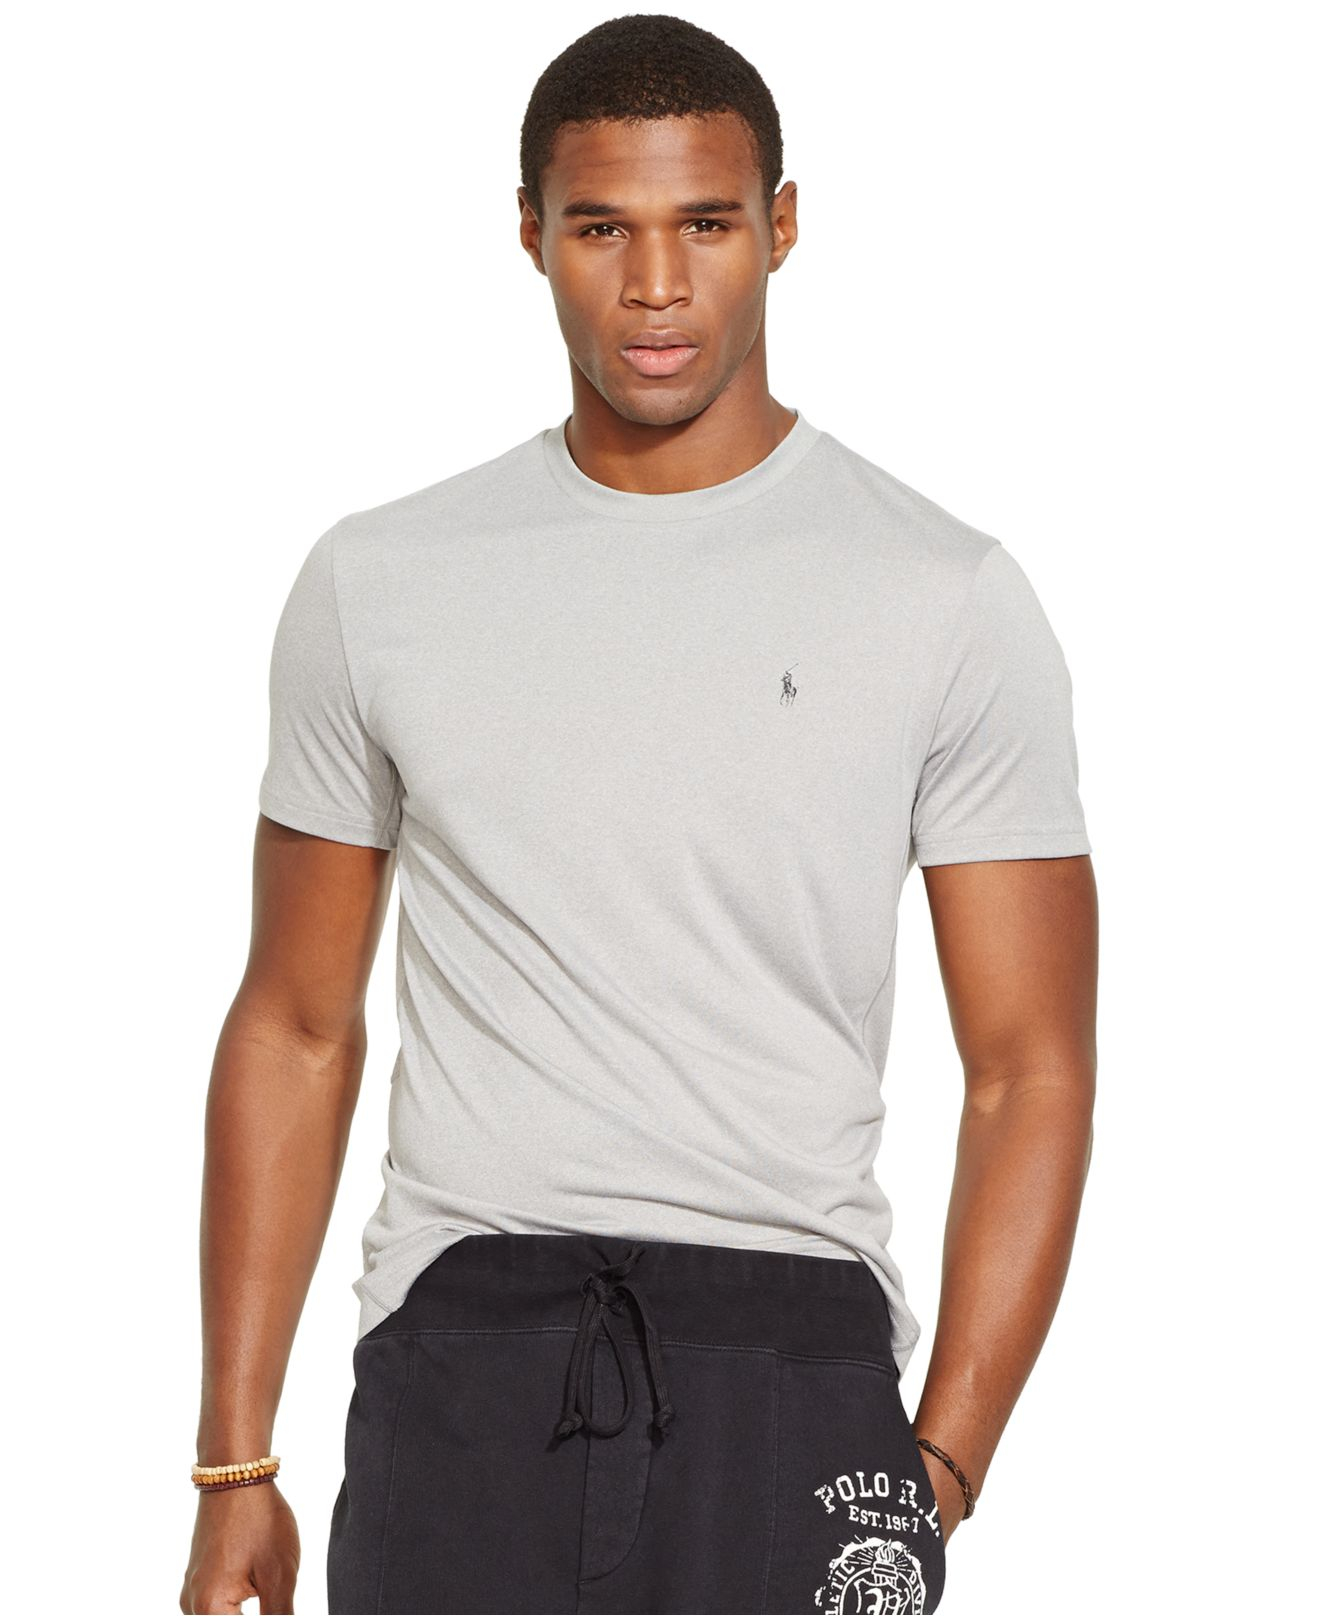 Polo Ralph Lauren Jersey Performance T-Shirt in Gray for Men - Lyst